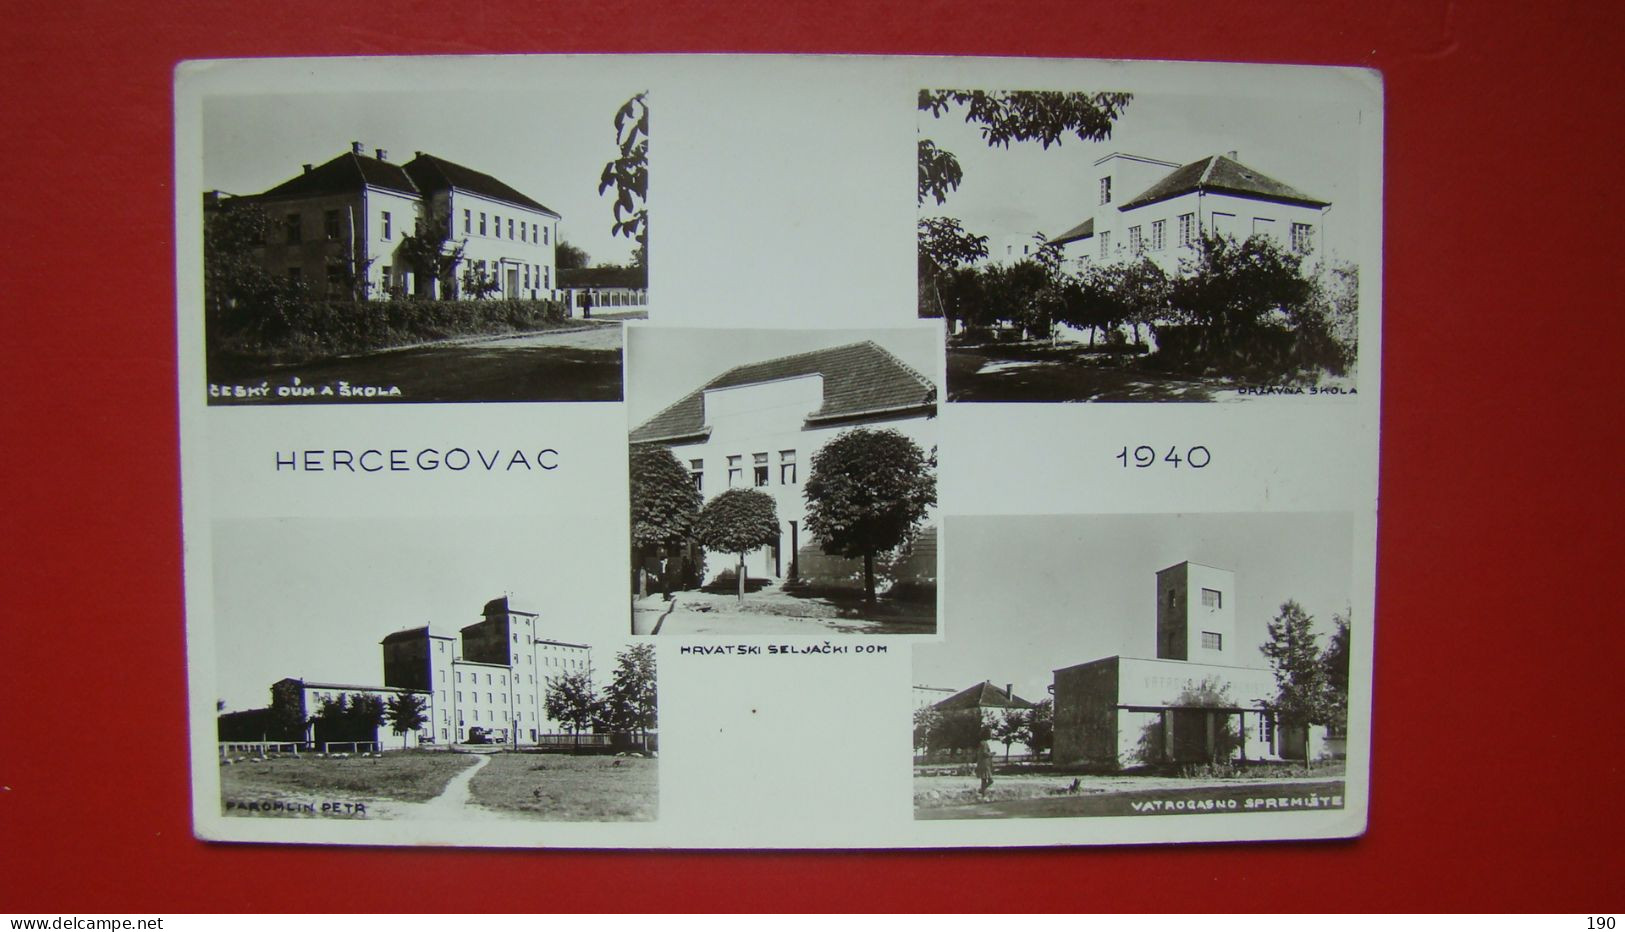 Hercegovac(1940). Cesky Dum A Skola,Hrvatski Seljacki Dom,Vatrogasno Spremiste. - Croatie